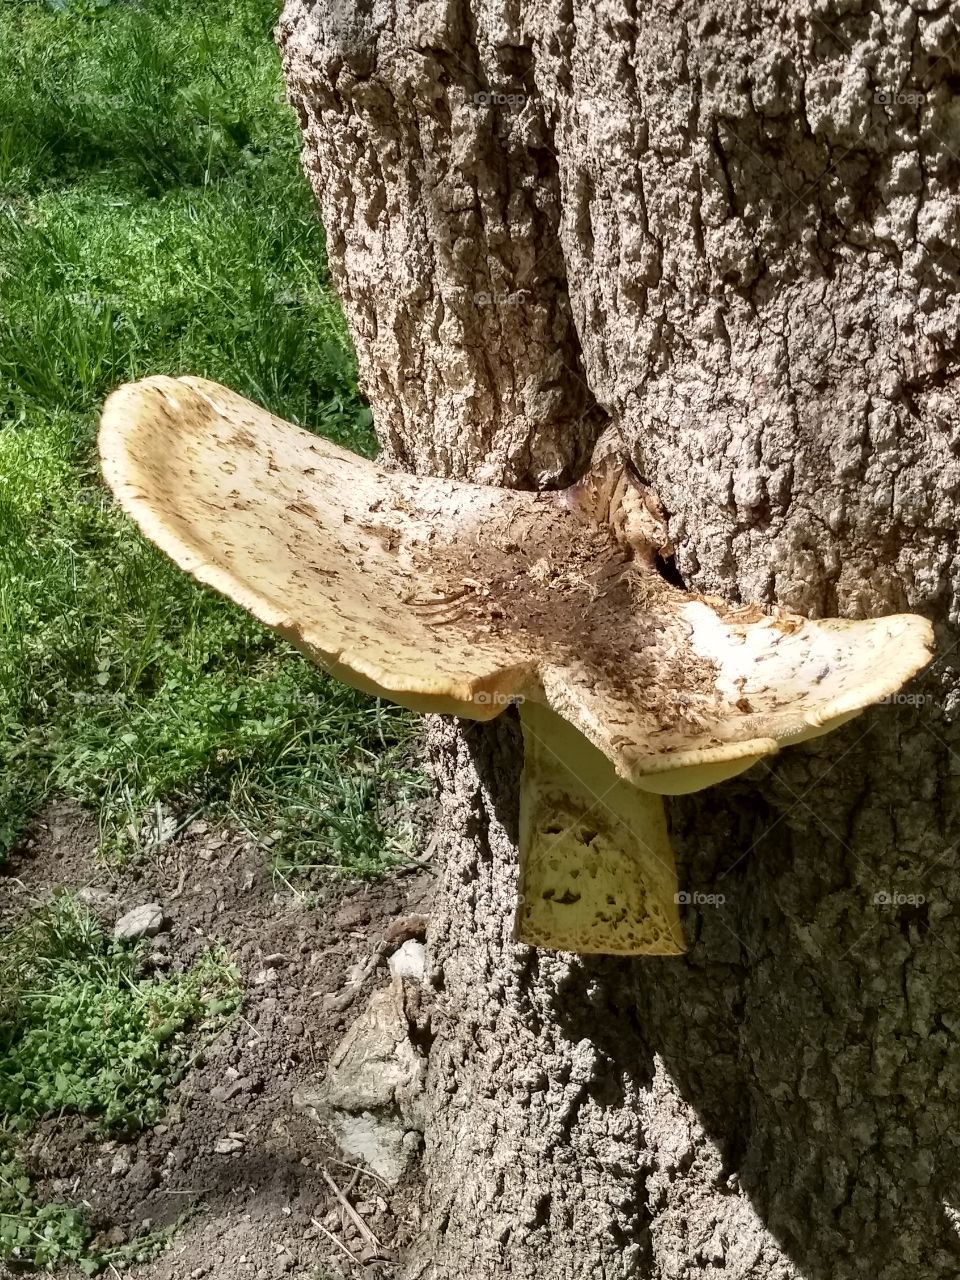 Mushroom growing on the side of the tree.